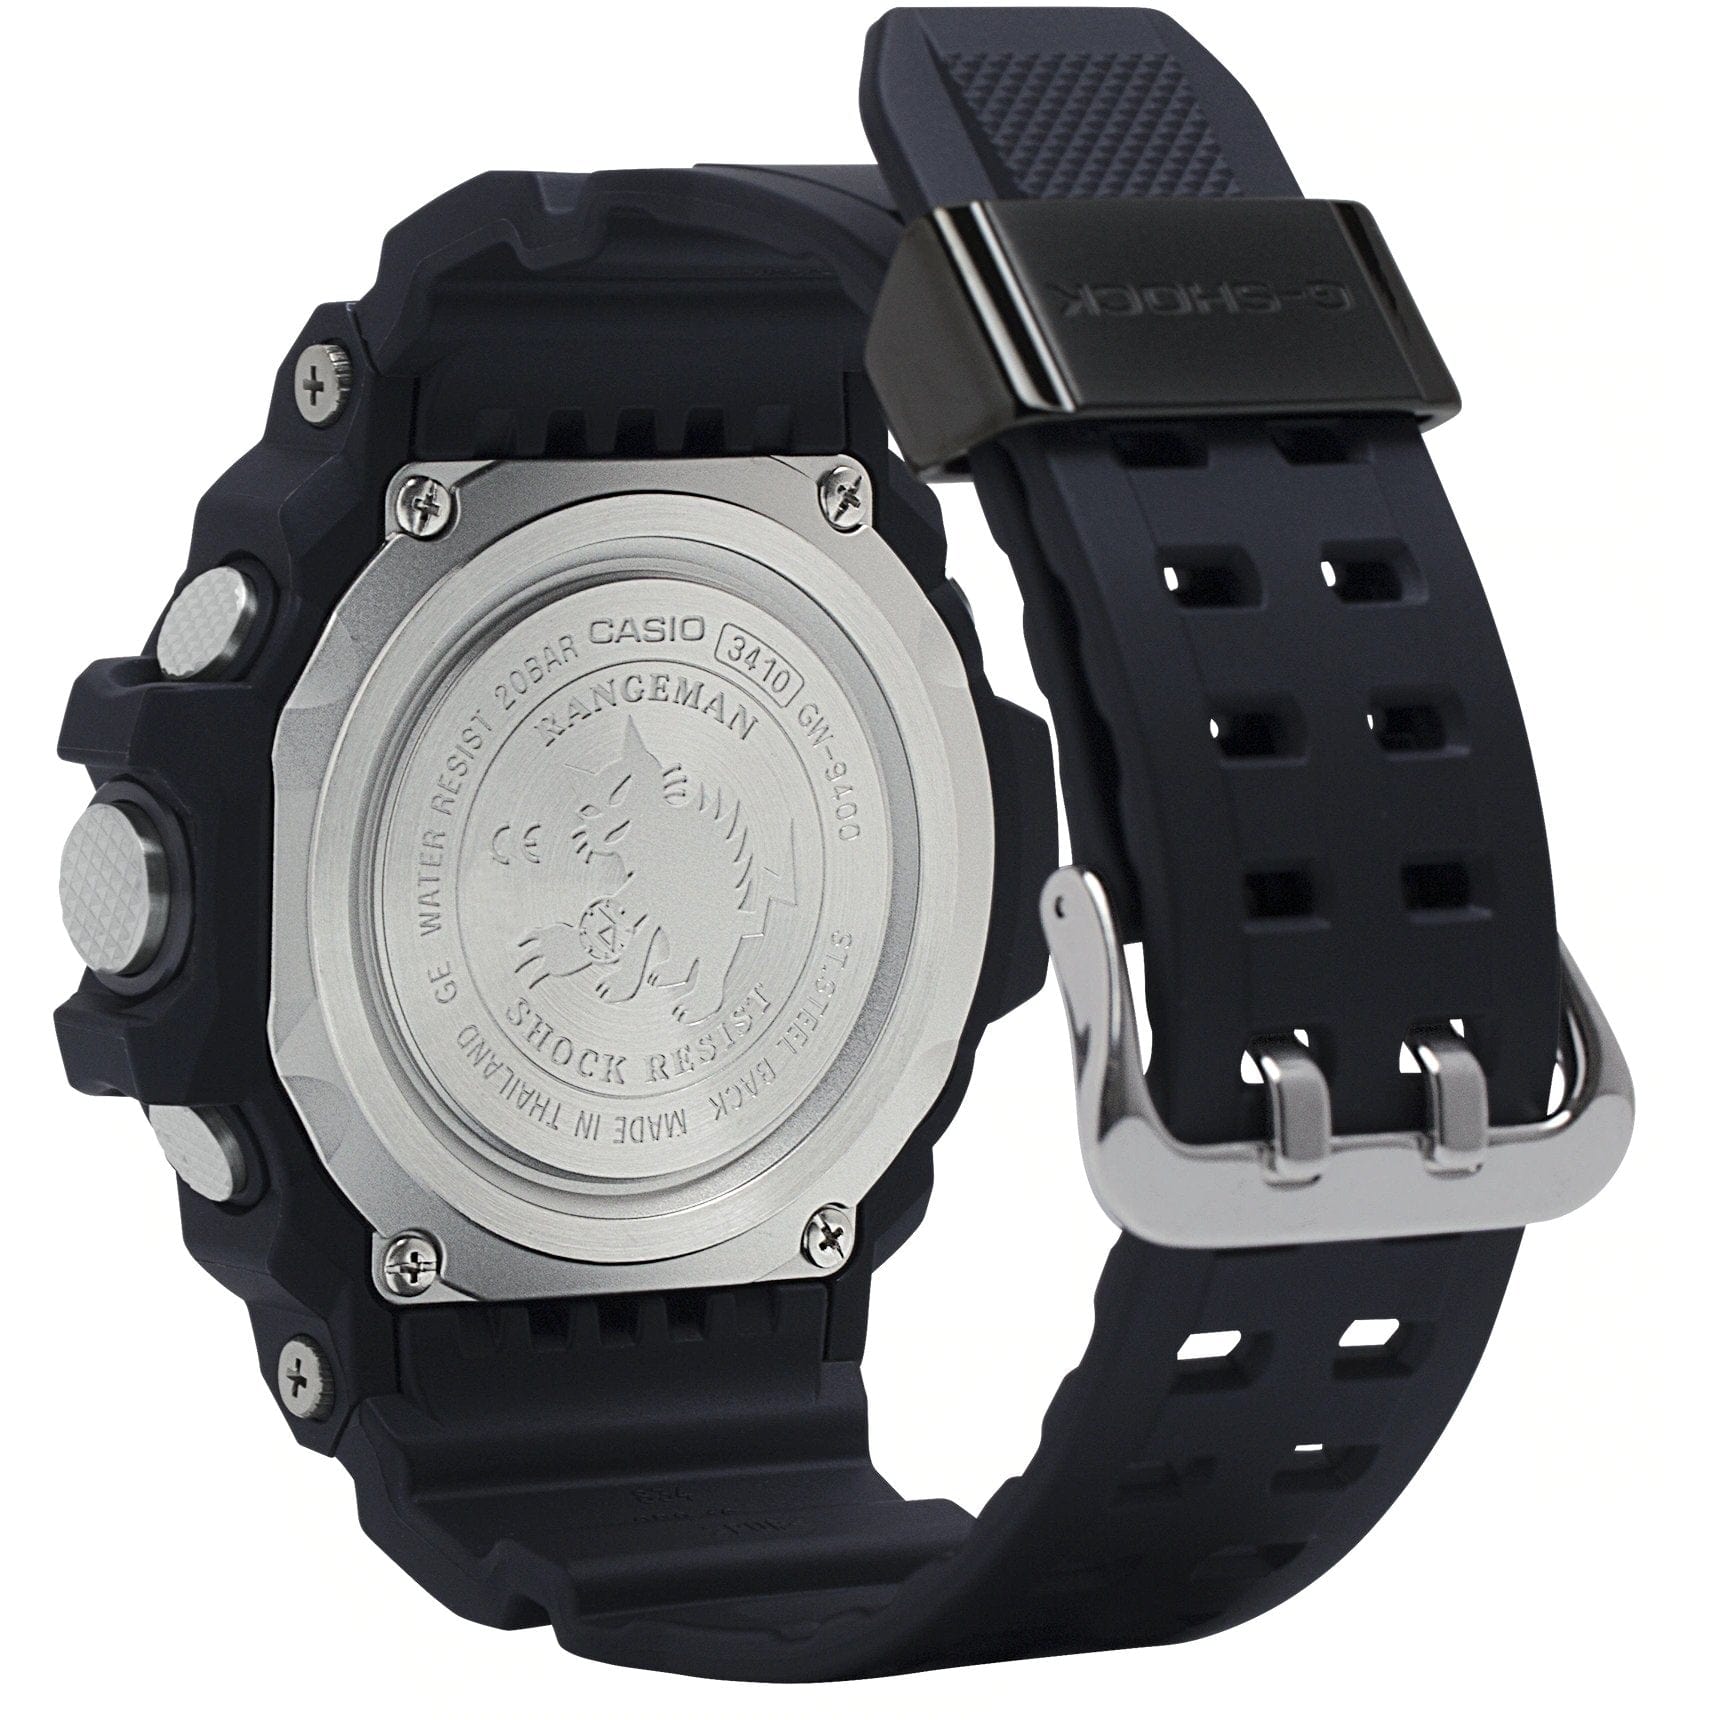 Casio Rangeman G-Shock Black on Black Solar Atomic Watch GW9400-1B - PilotMall.com